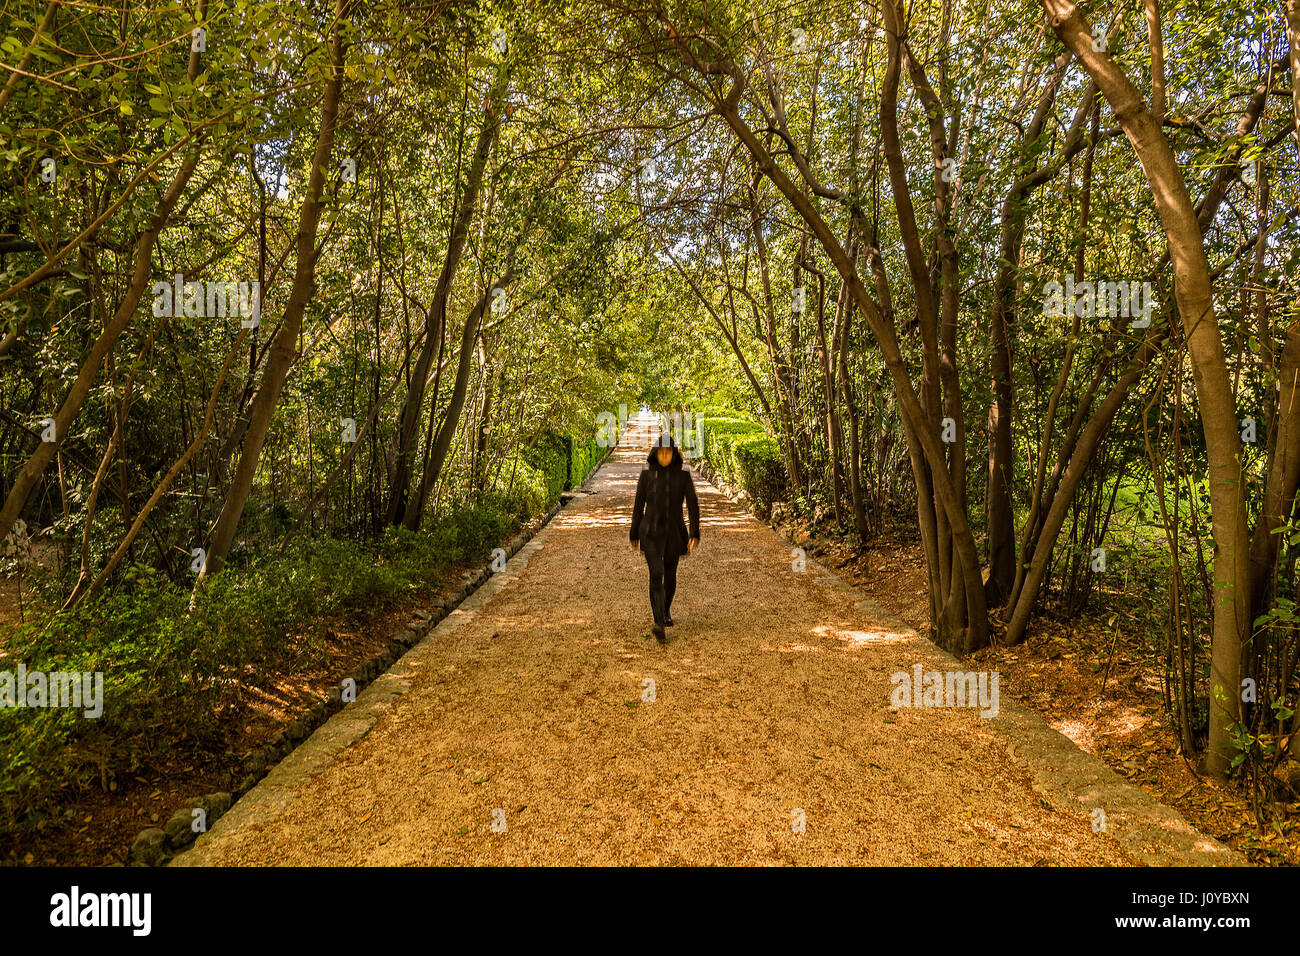 Croatia Dalmatia Trsteno Arboretum - Raised avenue with human Figure Stock Photo